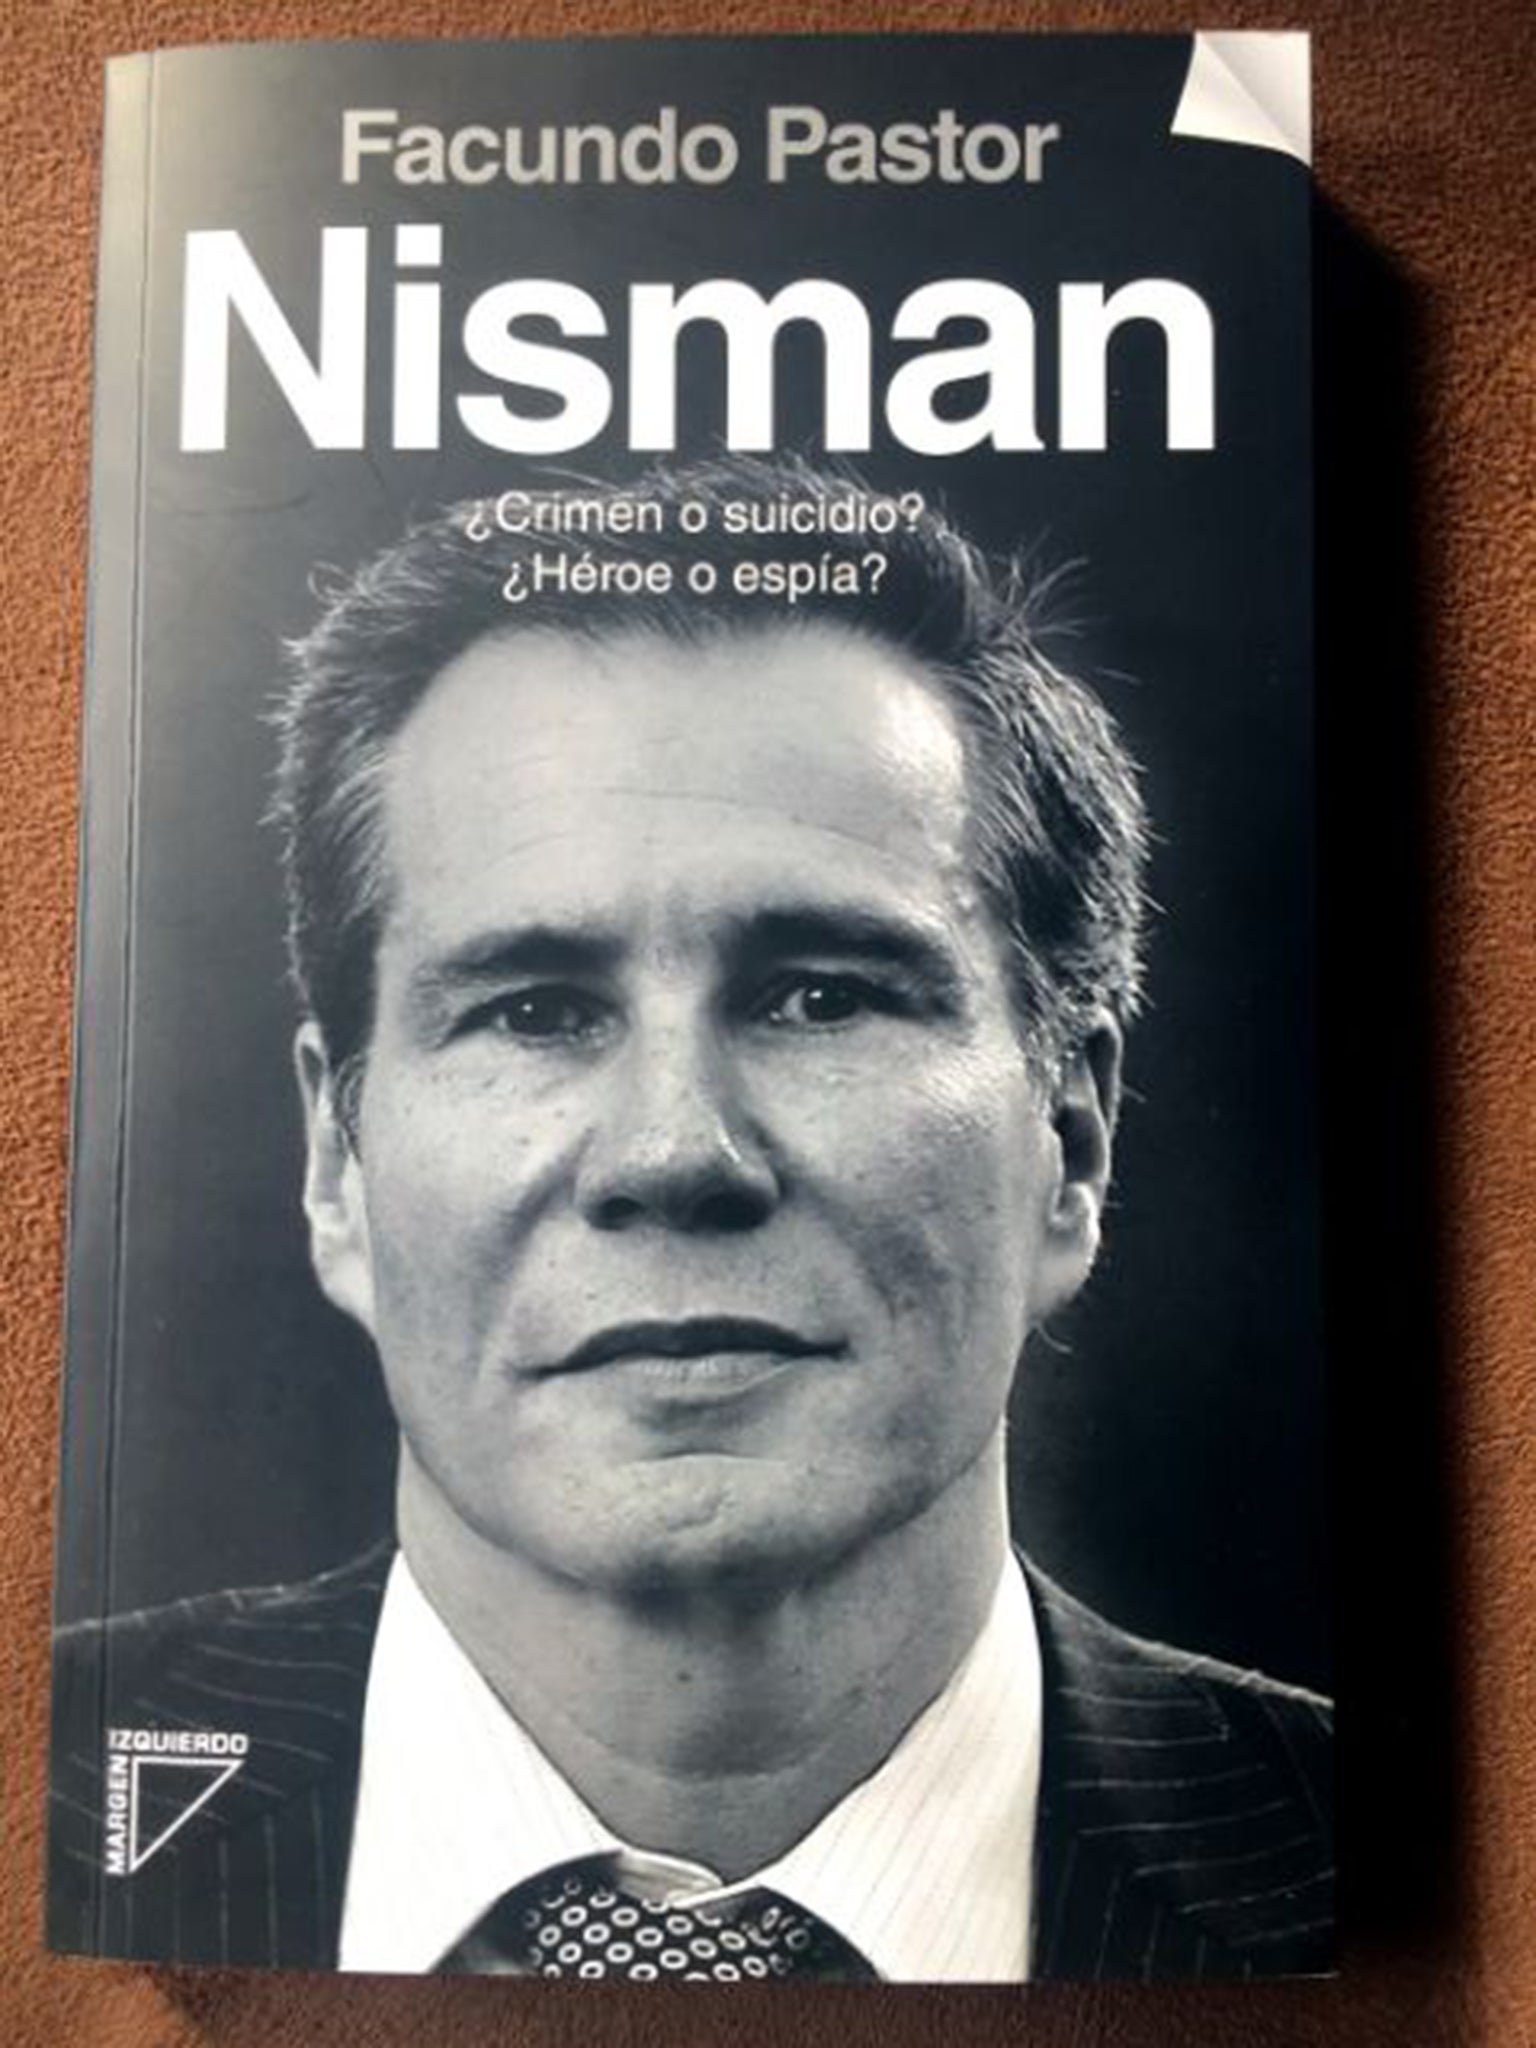 Facundo Pastor makes the claims in his book, ‘Nisman’